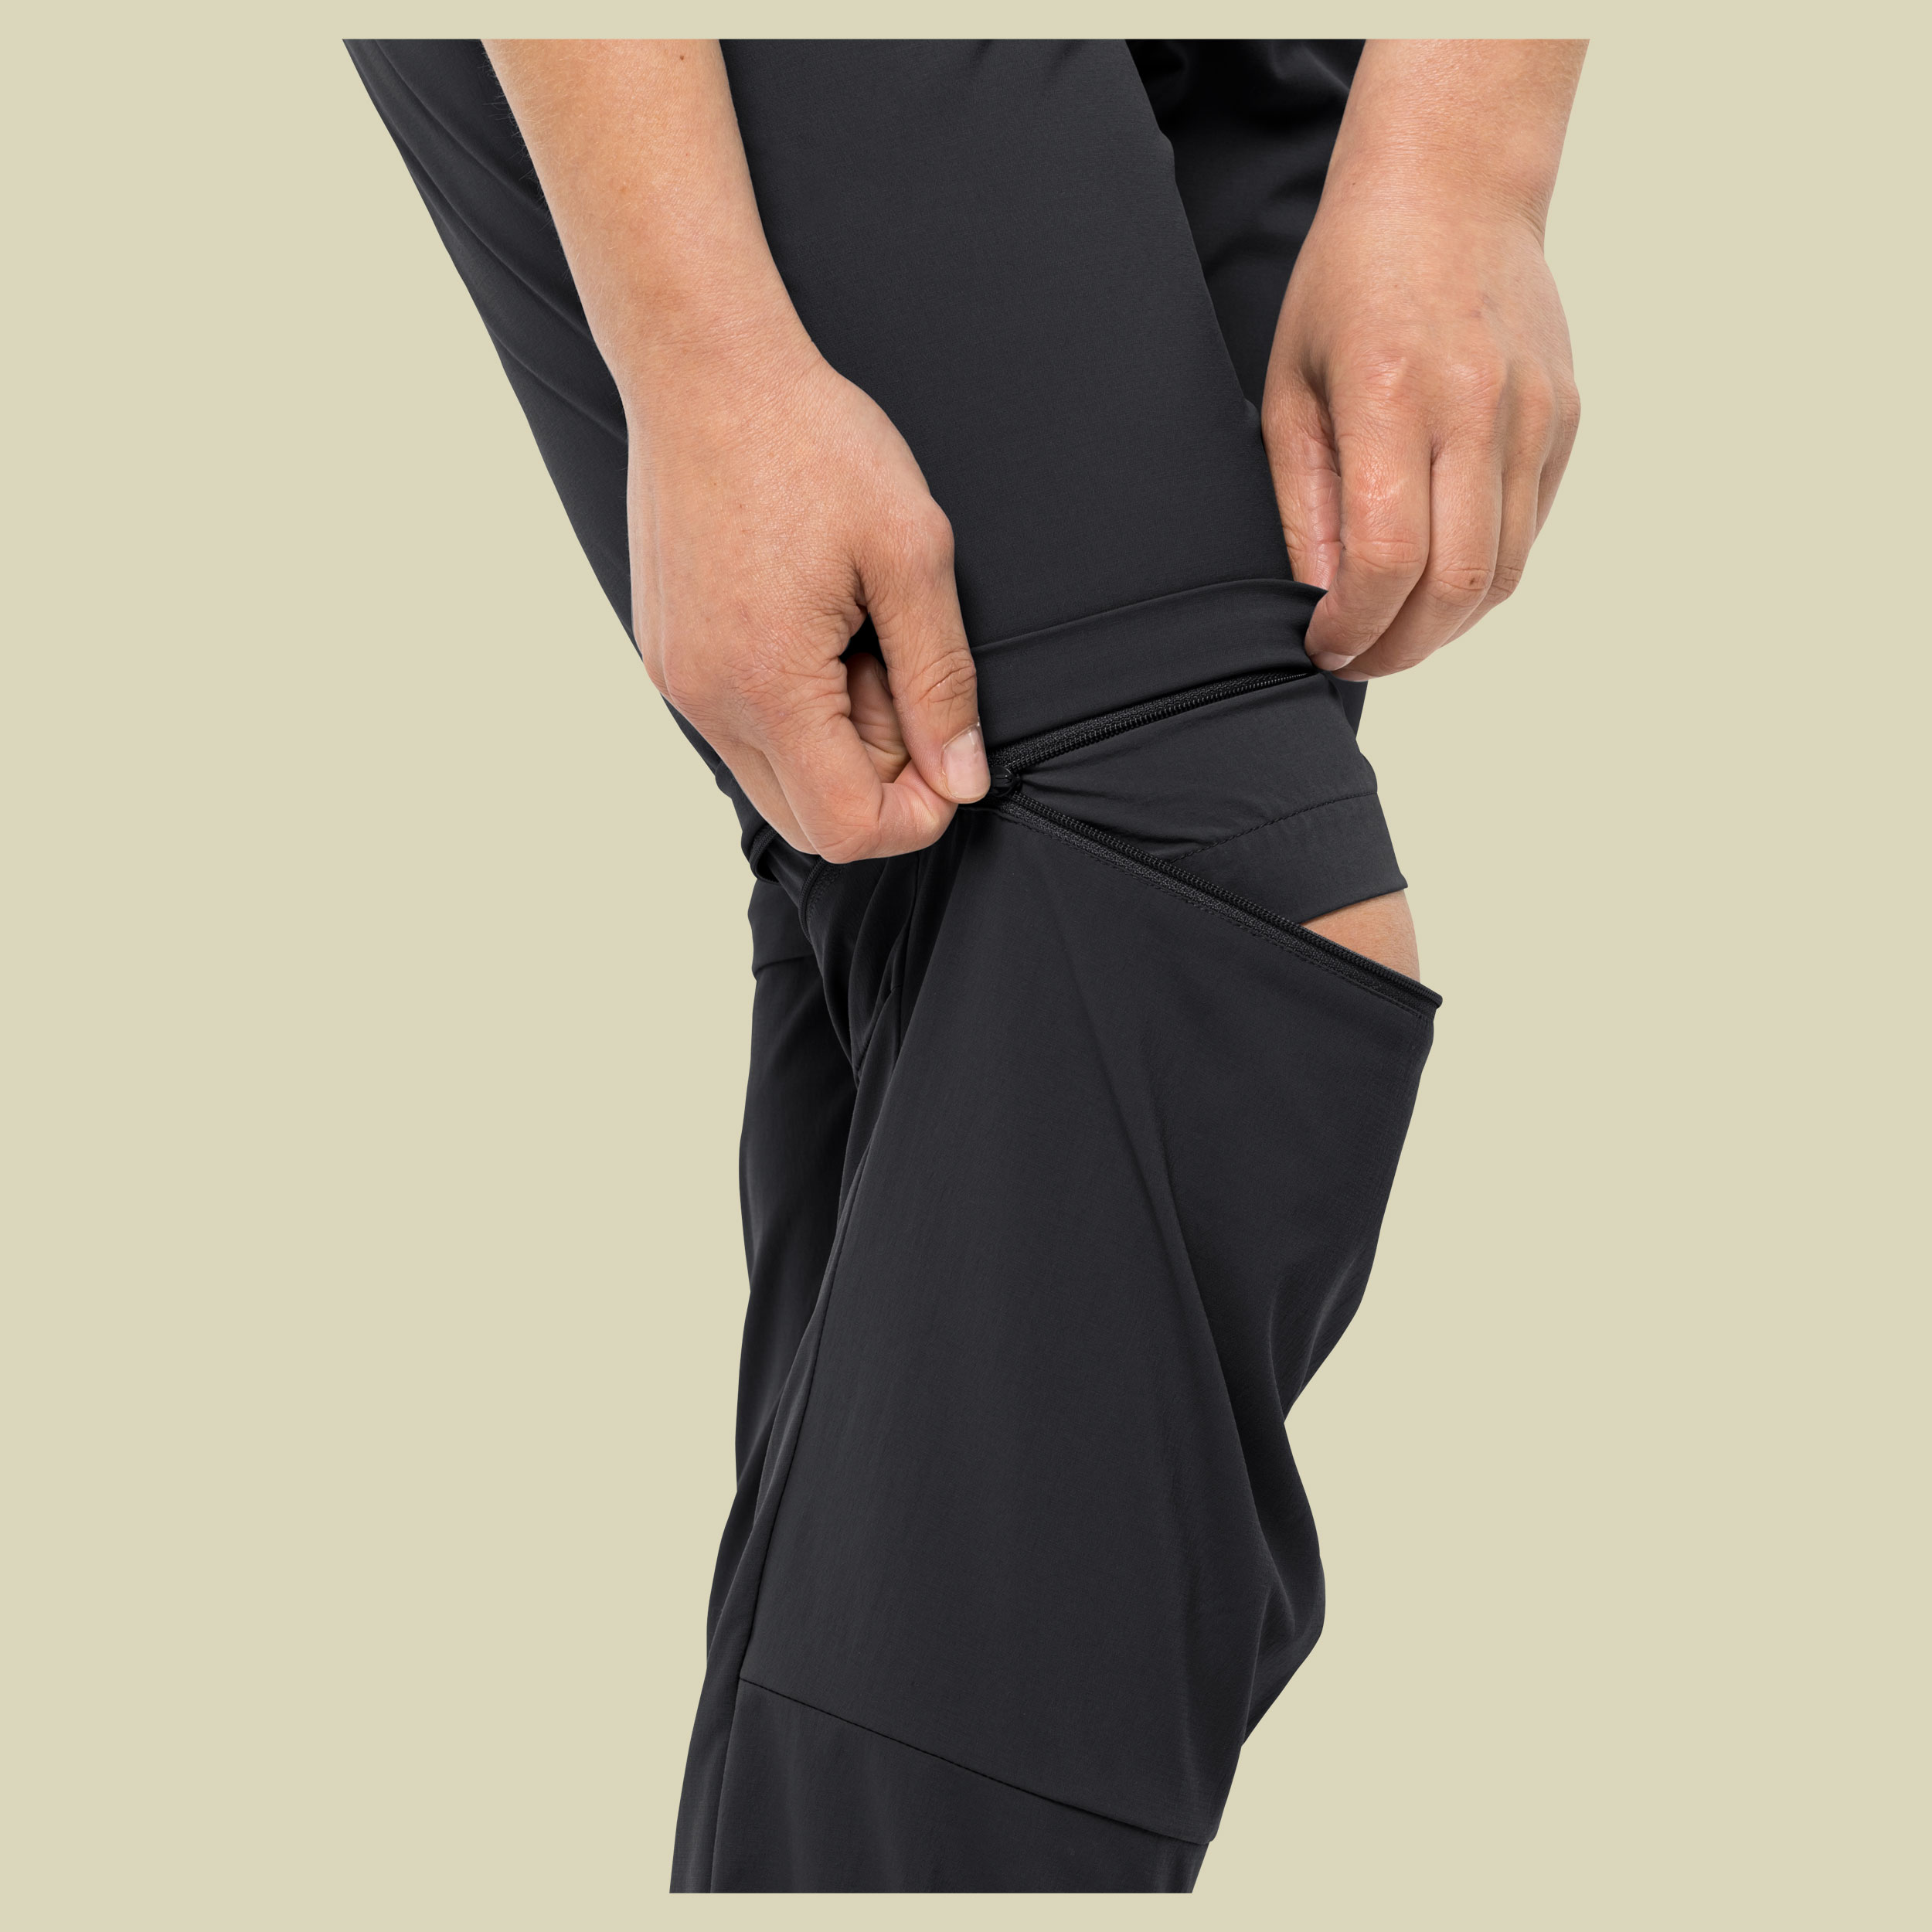 Glastal Zip Off Pants Women Größe 46 Farbe black